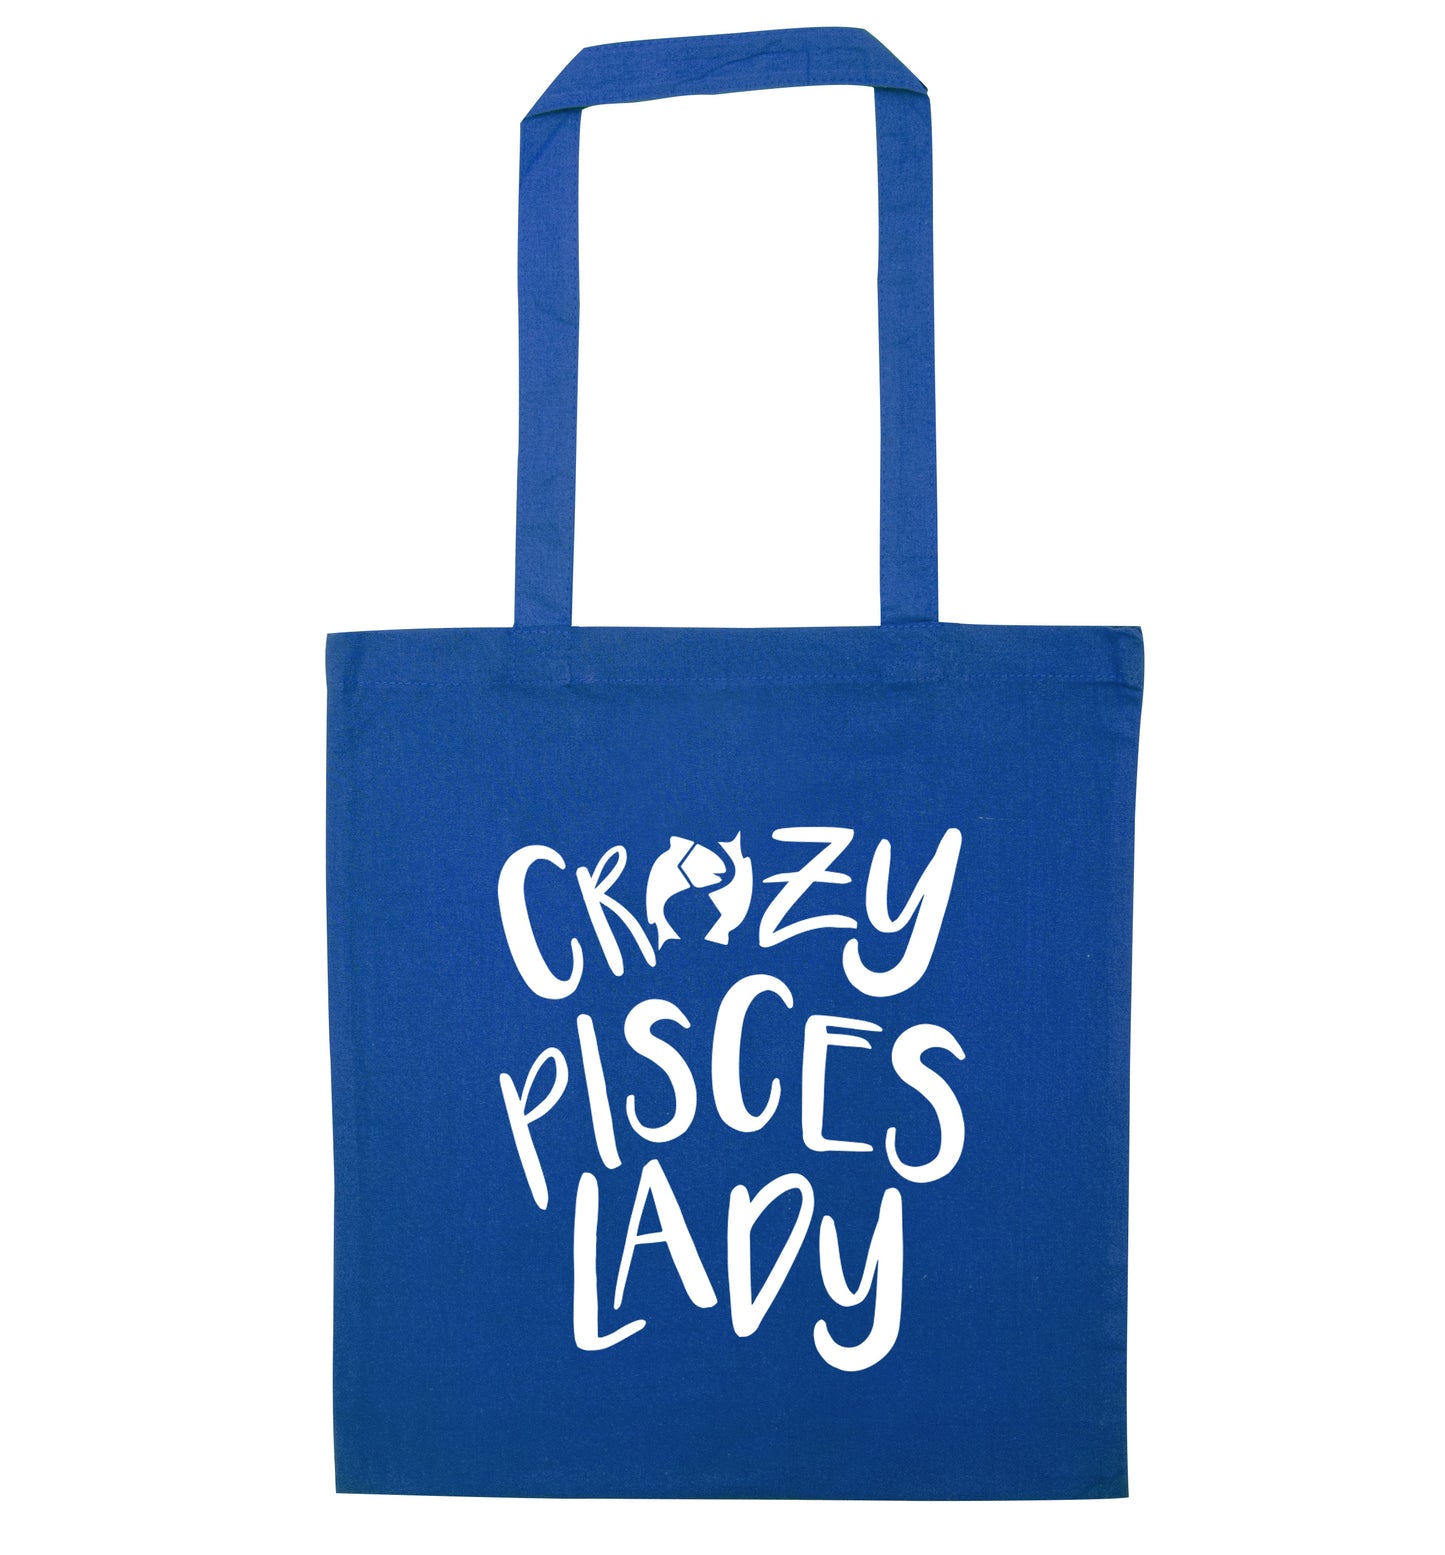 Crazy pisces Lady blue tote bag